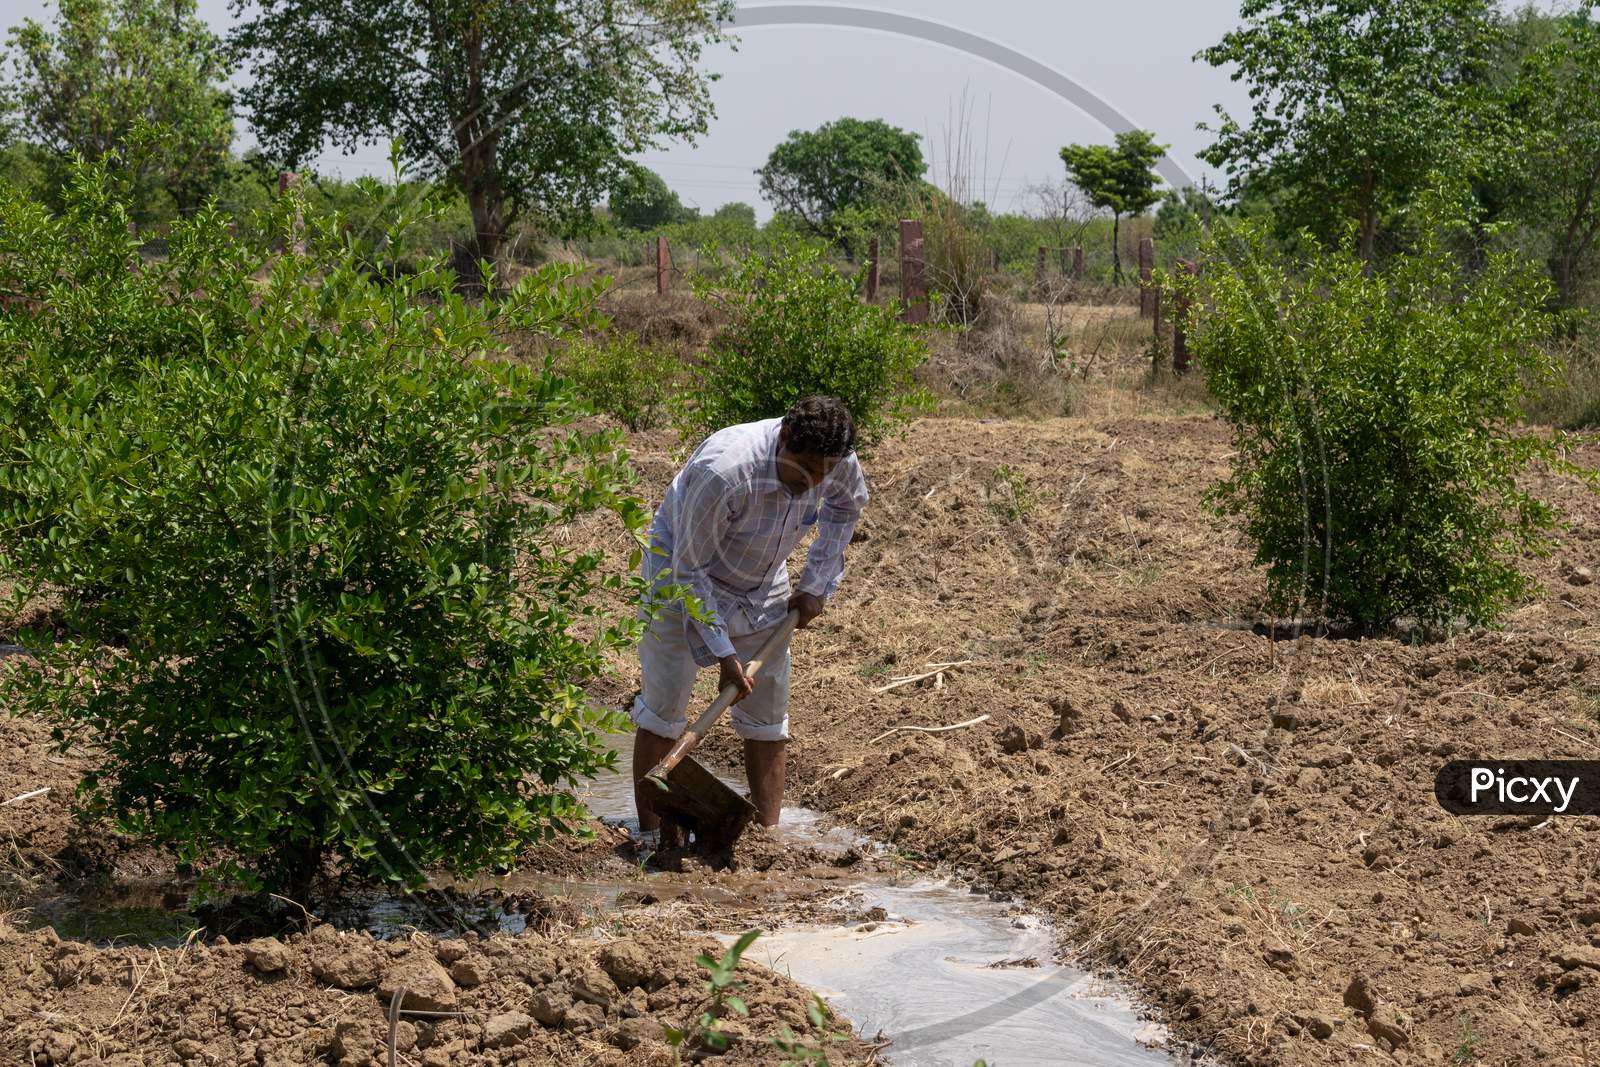 A farmer watering lemon garden at his farm during a bright sunny day using a spade